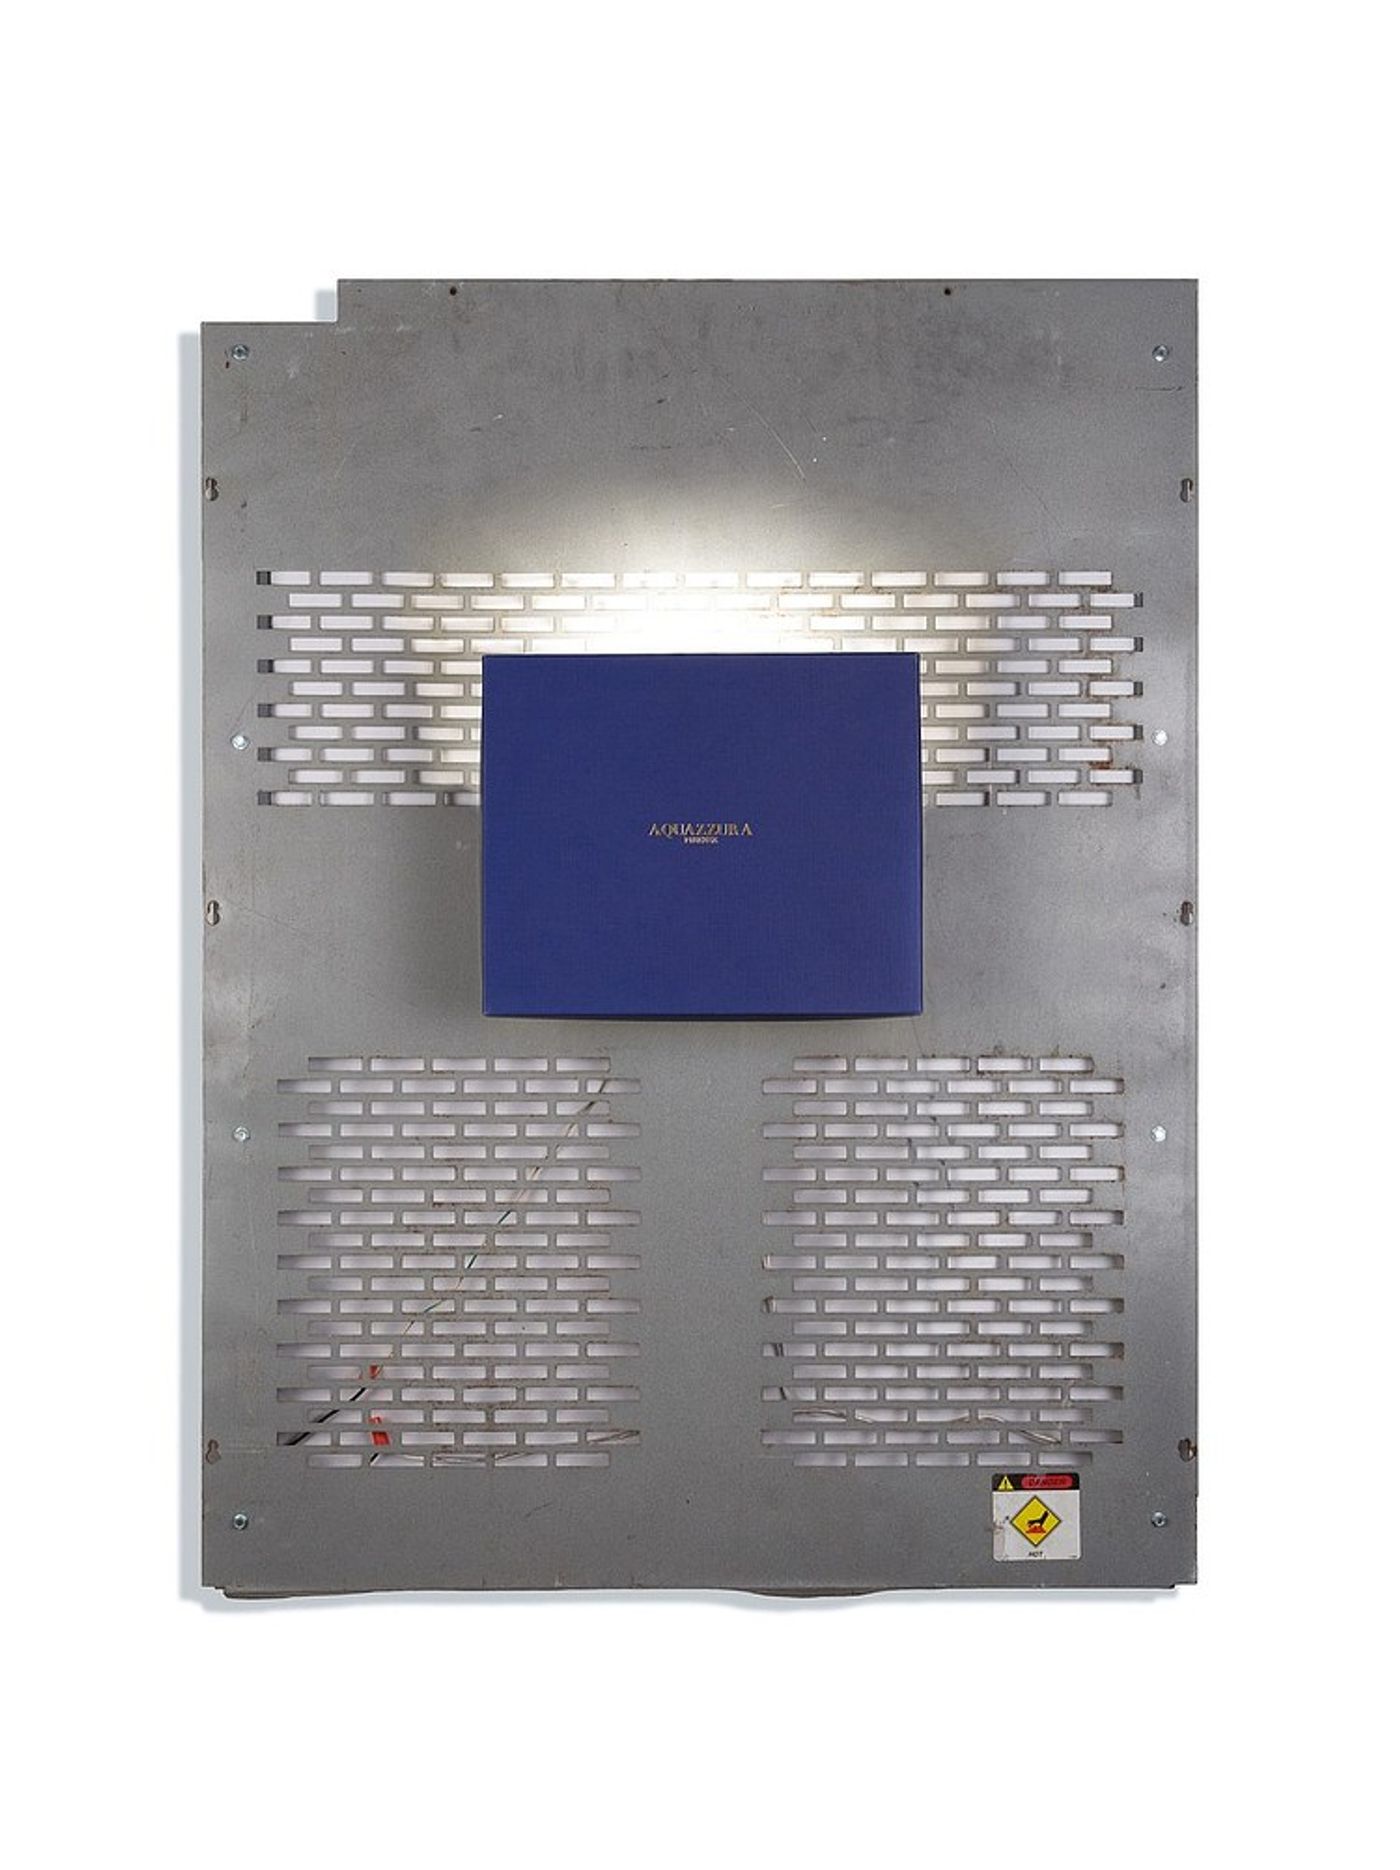 Aki Sasamoto, Shoebox Wall Sconce (Aquazzura Firenze), 2016. Shoebox lid, backboard of a used laundry machine, wall sconce, wood, LED light bulb and push button switch, 32 x 26 x 5 1/2 in (81 x 67 x 14cm).